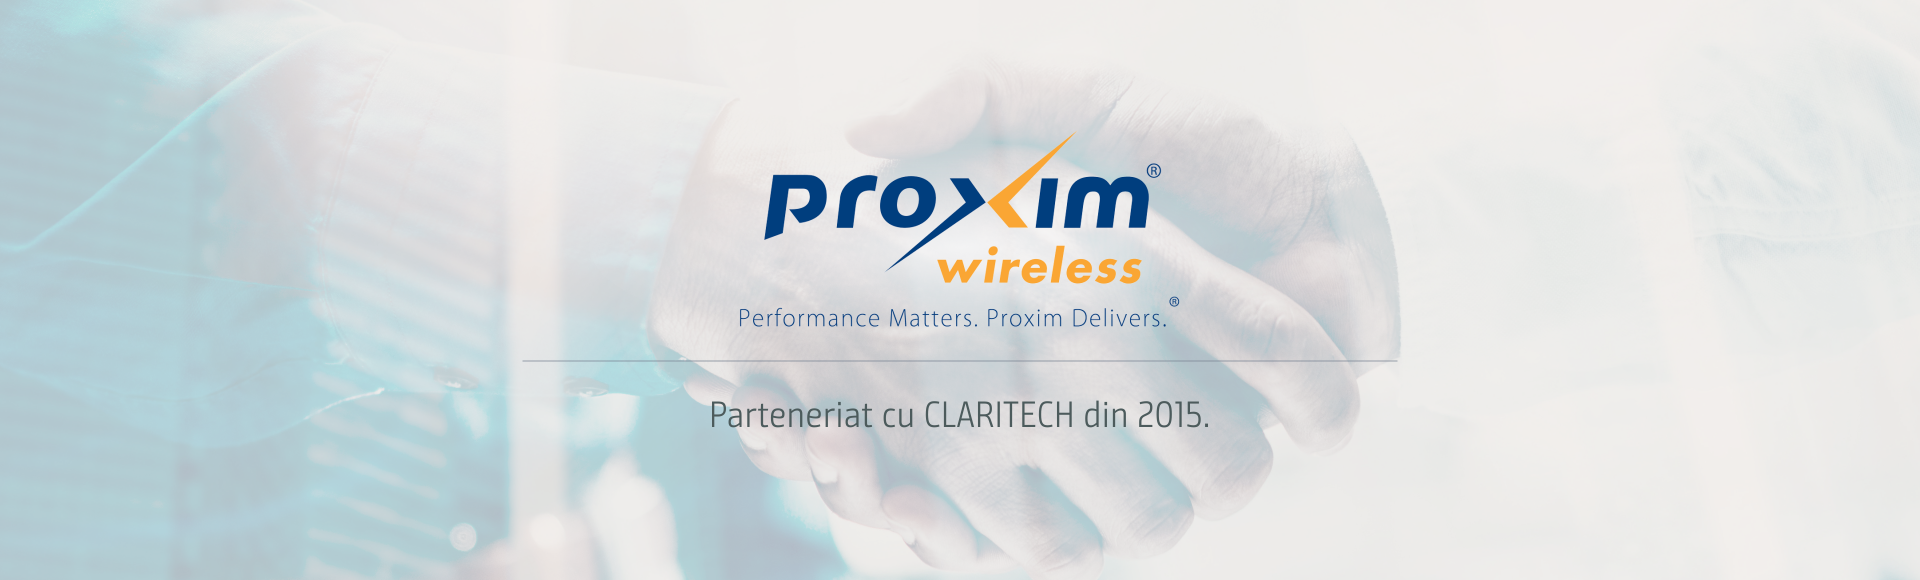 Echipamente wireless Proxim Wireless